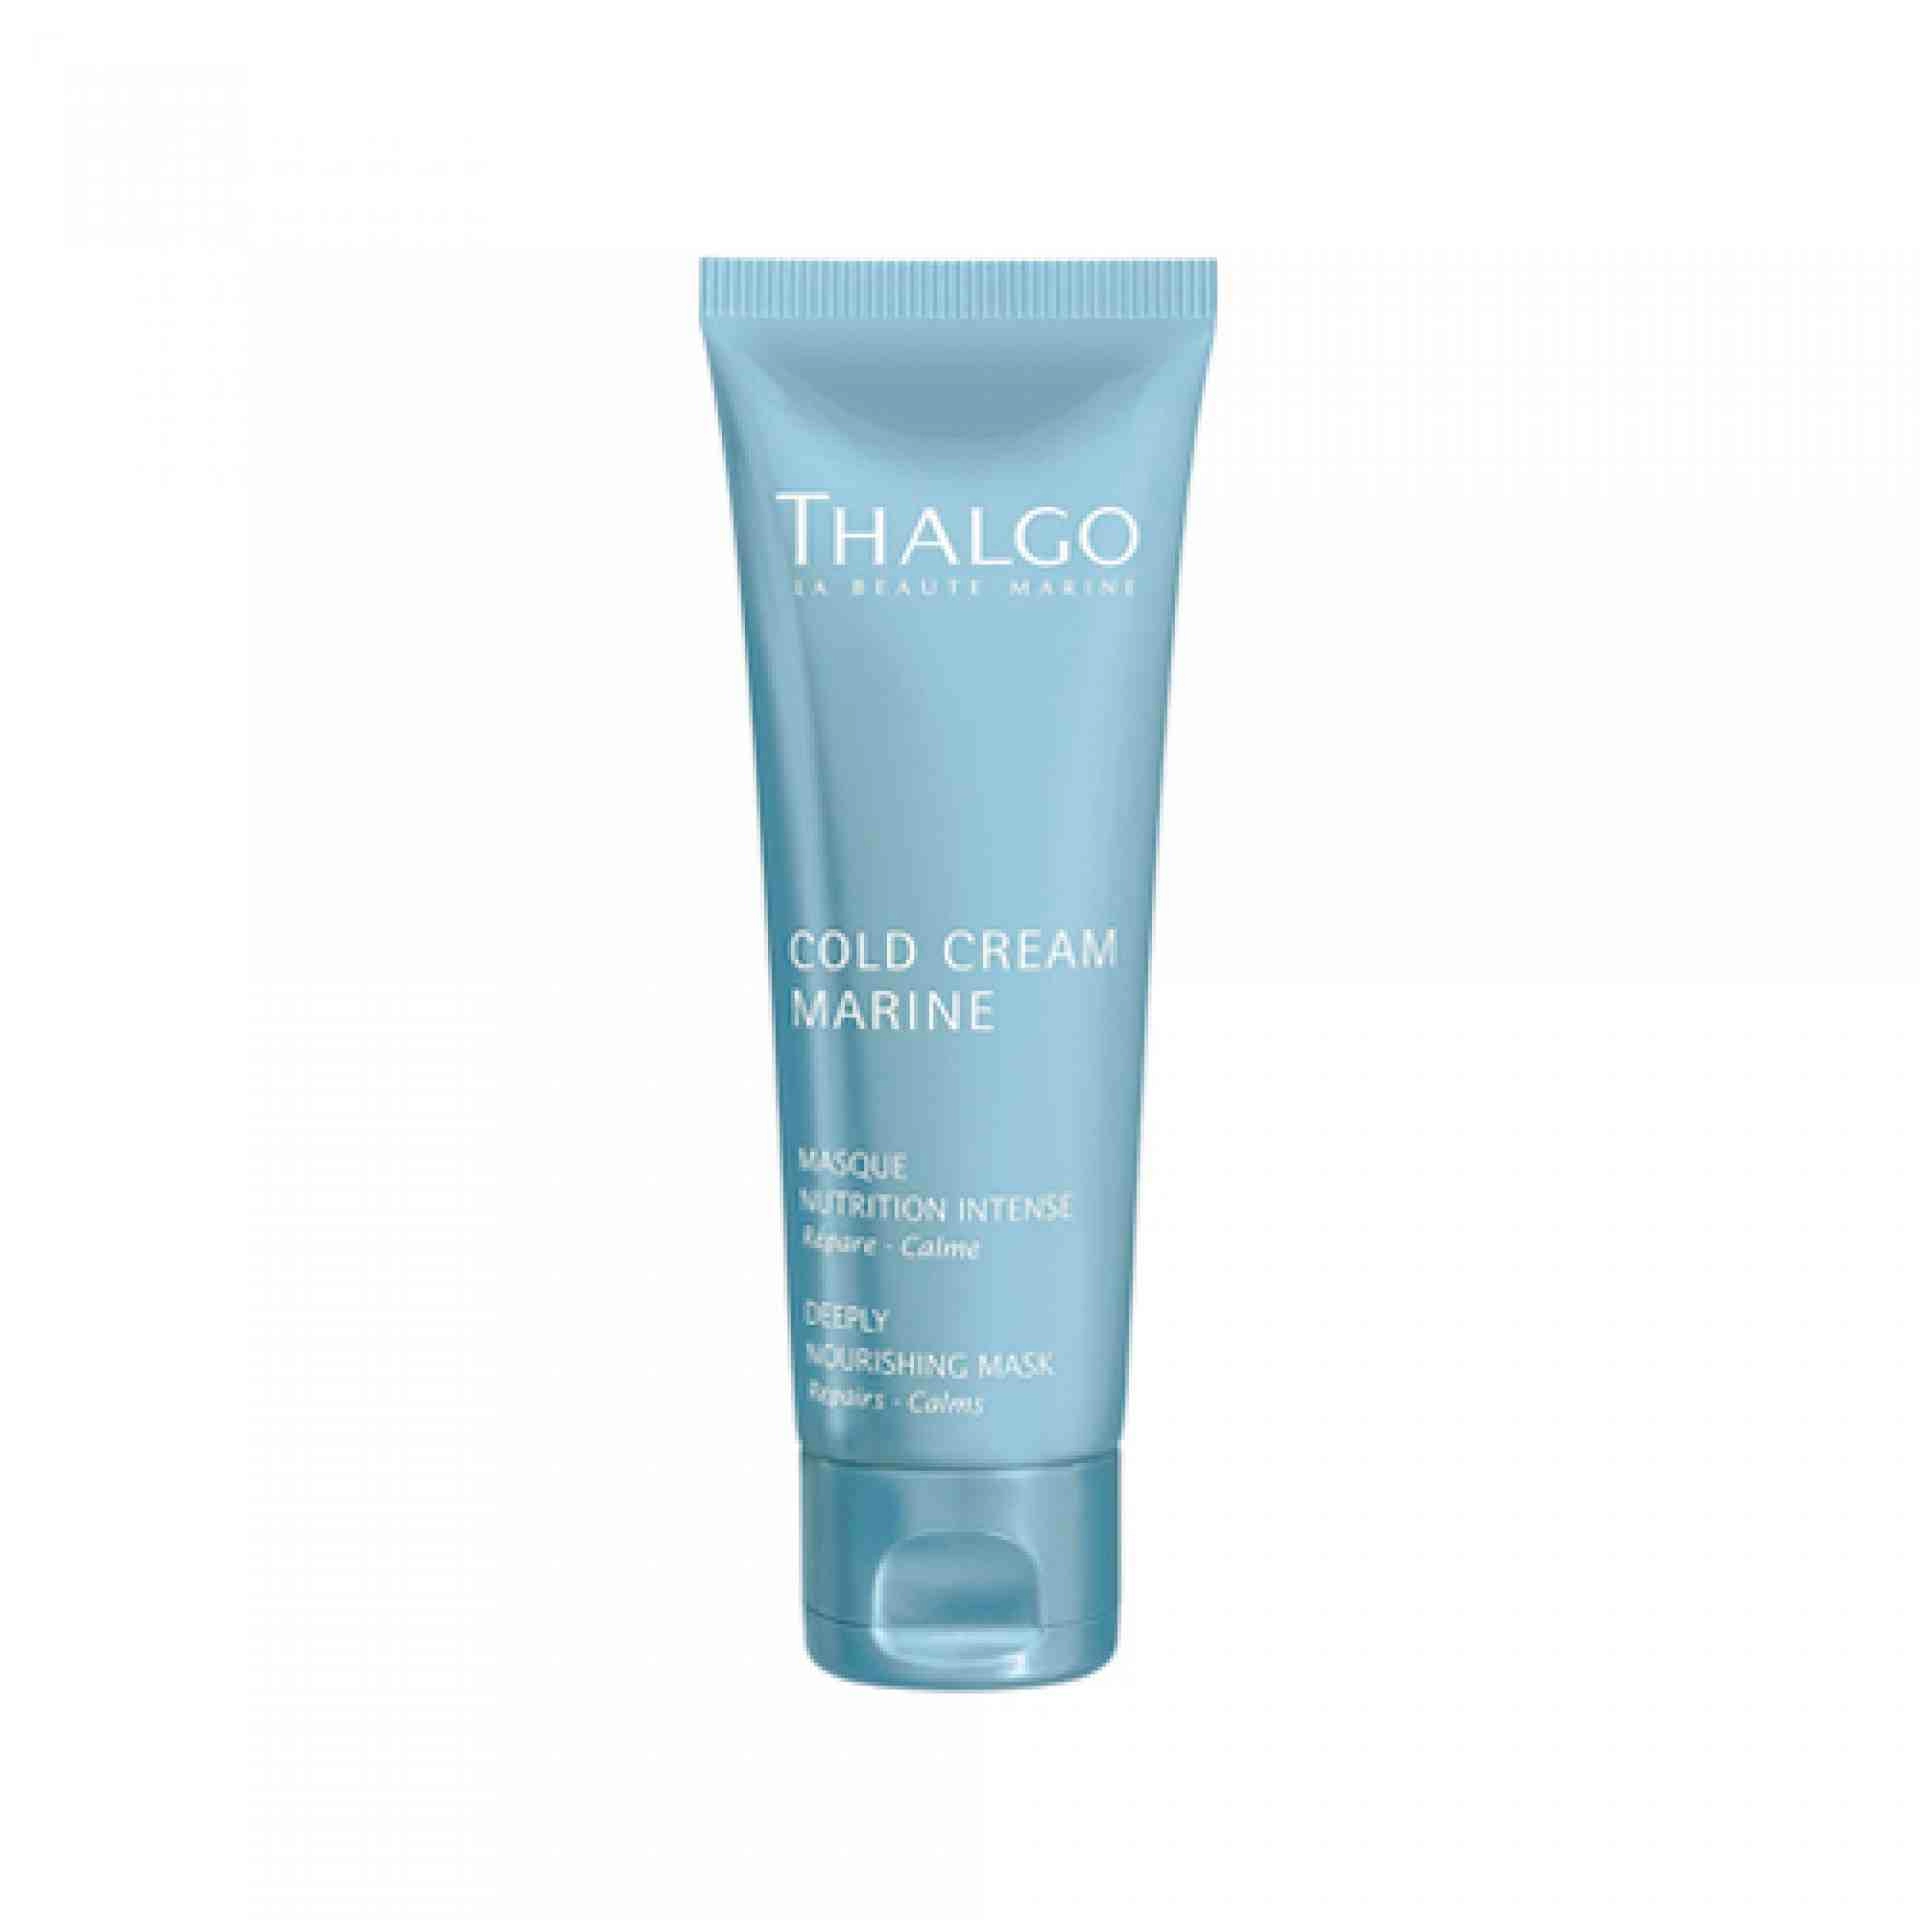 Masque Nutrition Intense | Mascarilla Reparadora 50ml - Cold Cream Marine - Thalgo ®